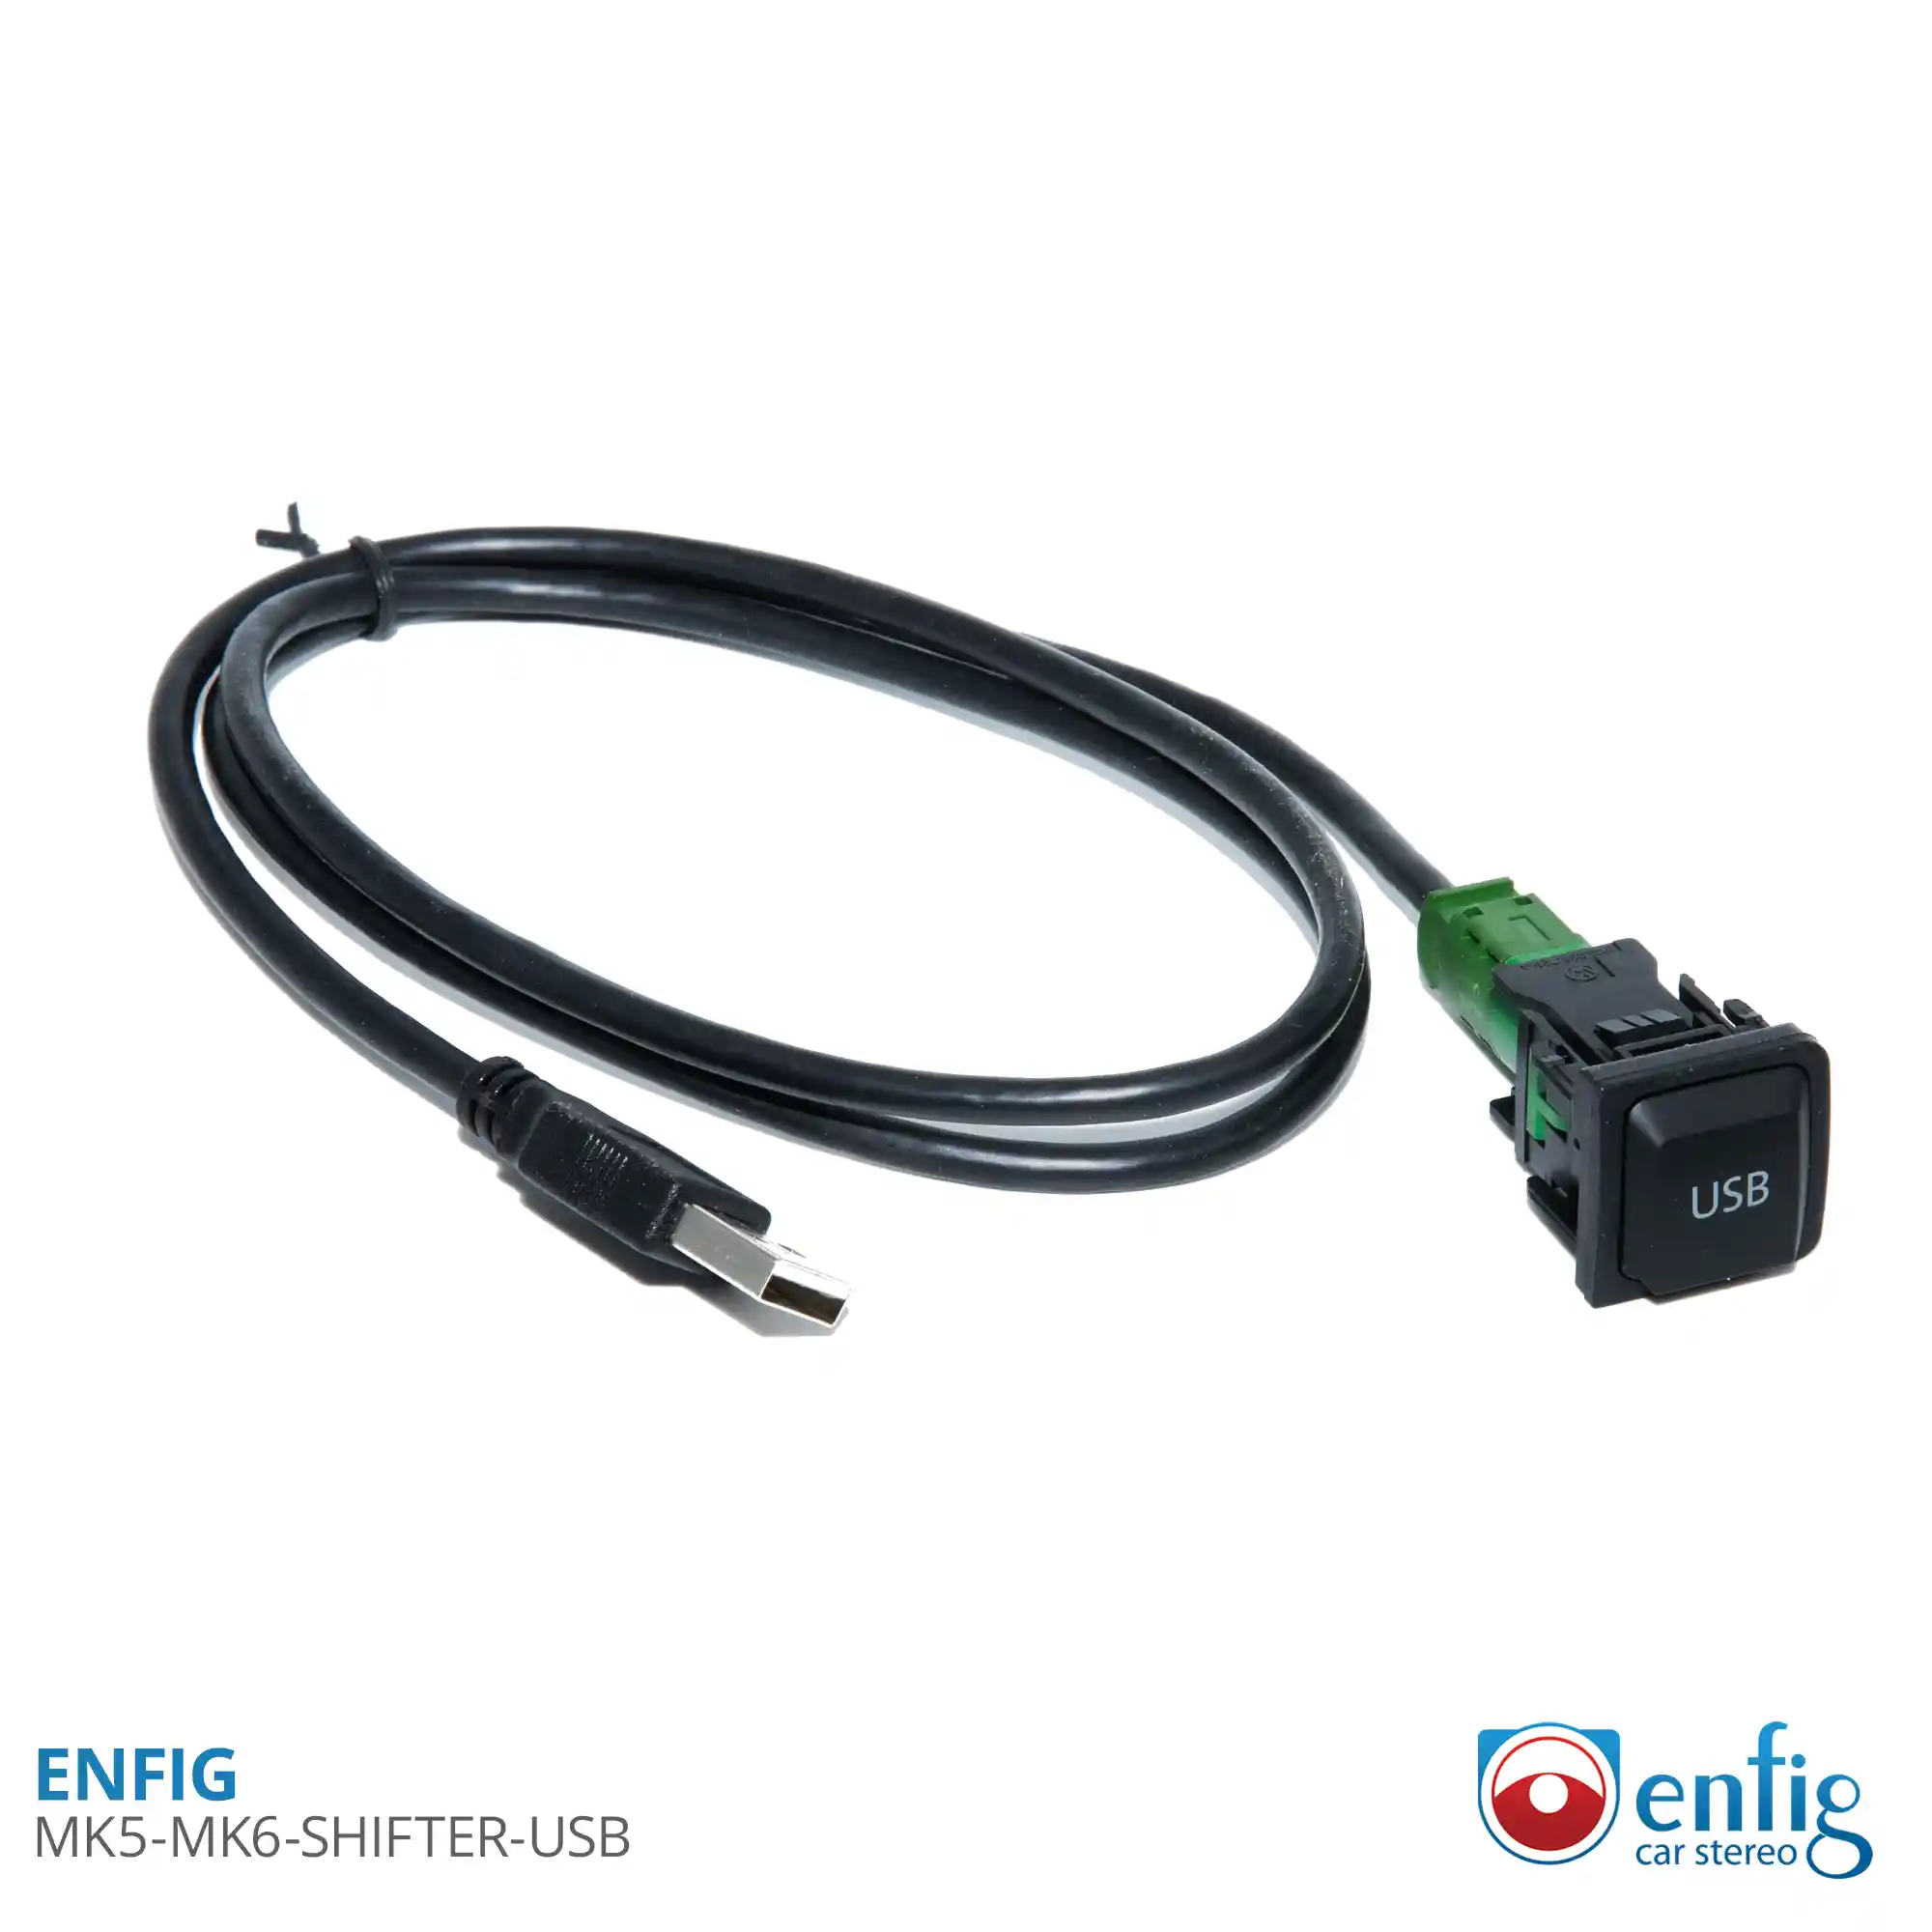 Enfig MK5 MK6 SHIFTER USB mountable USB 3.0 extension for CarPlay